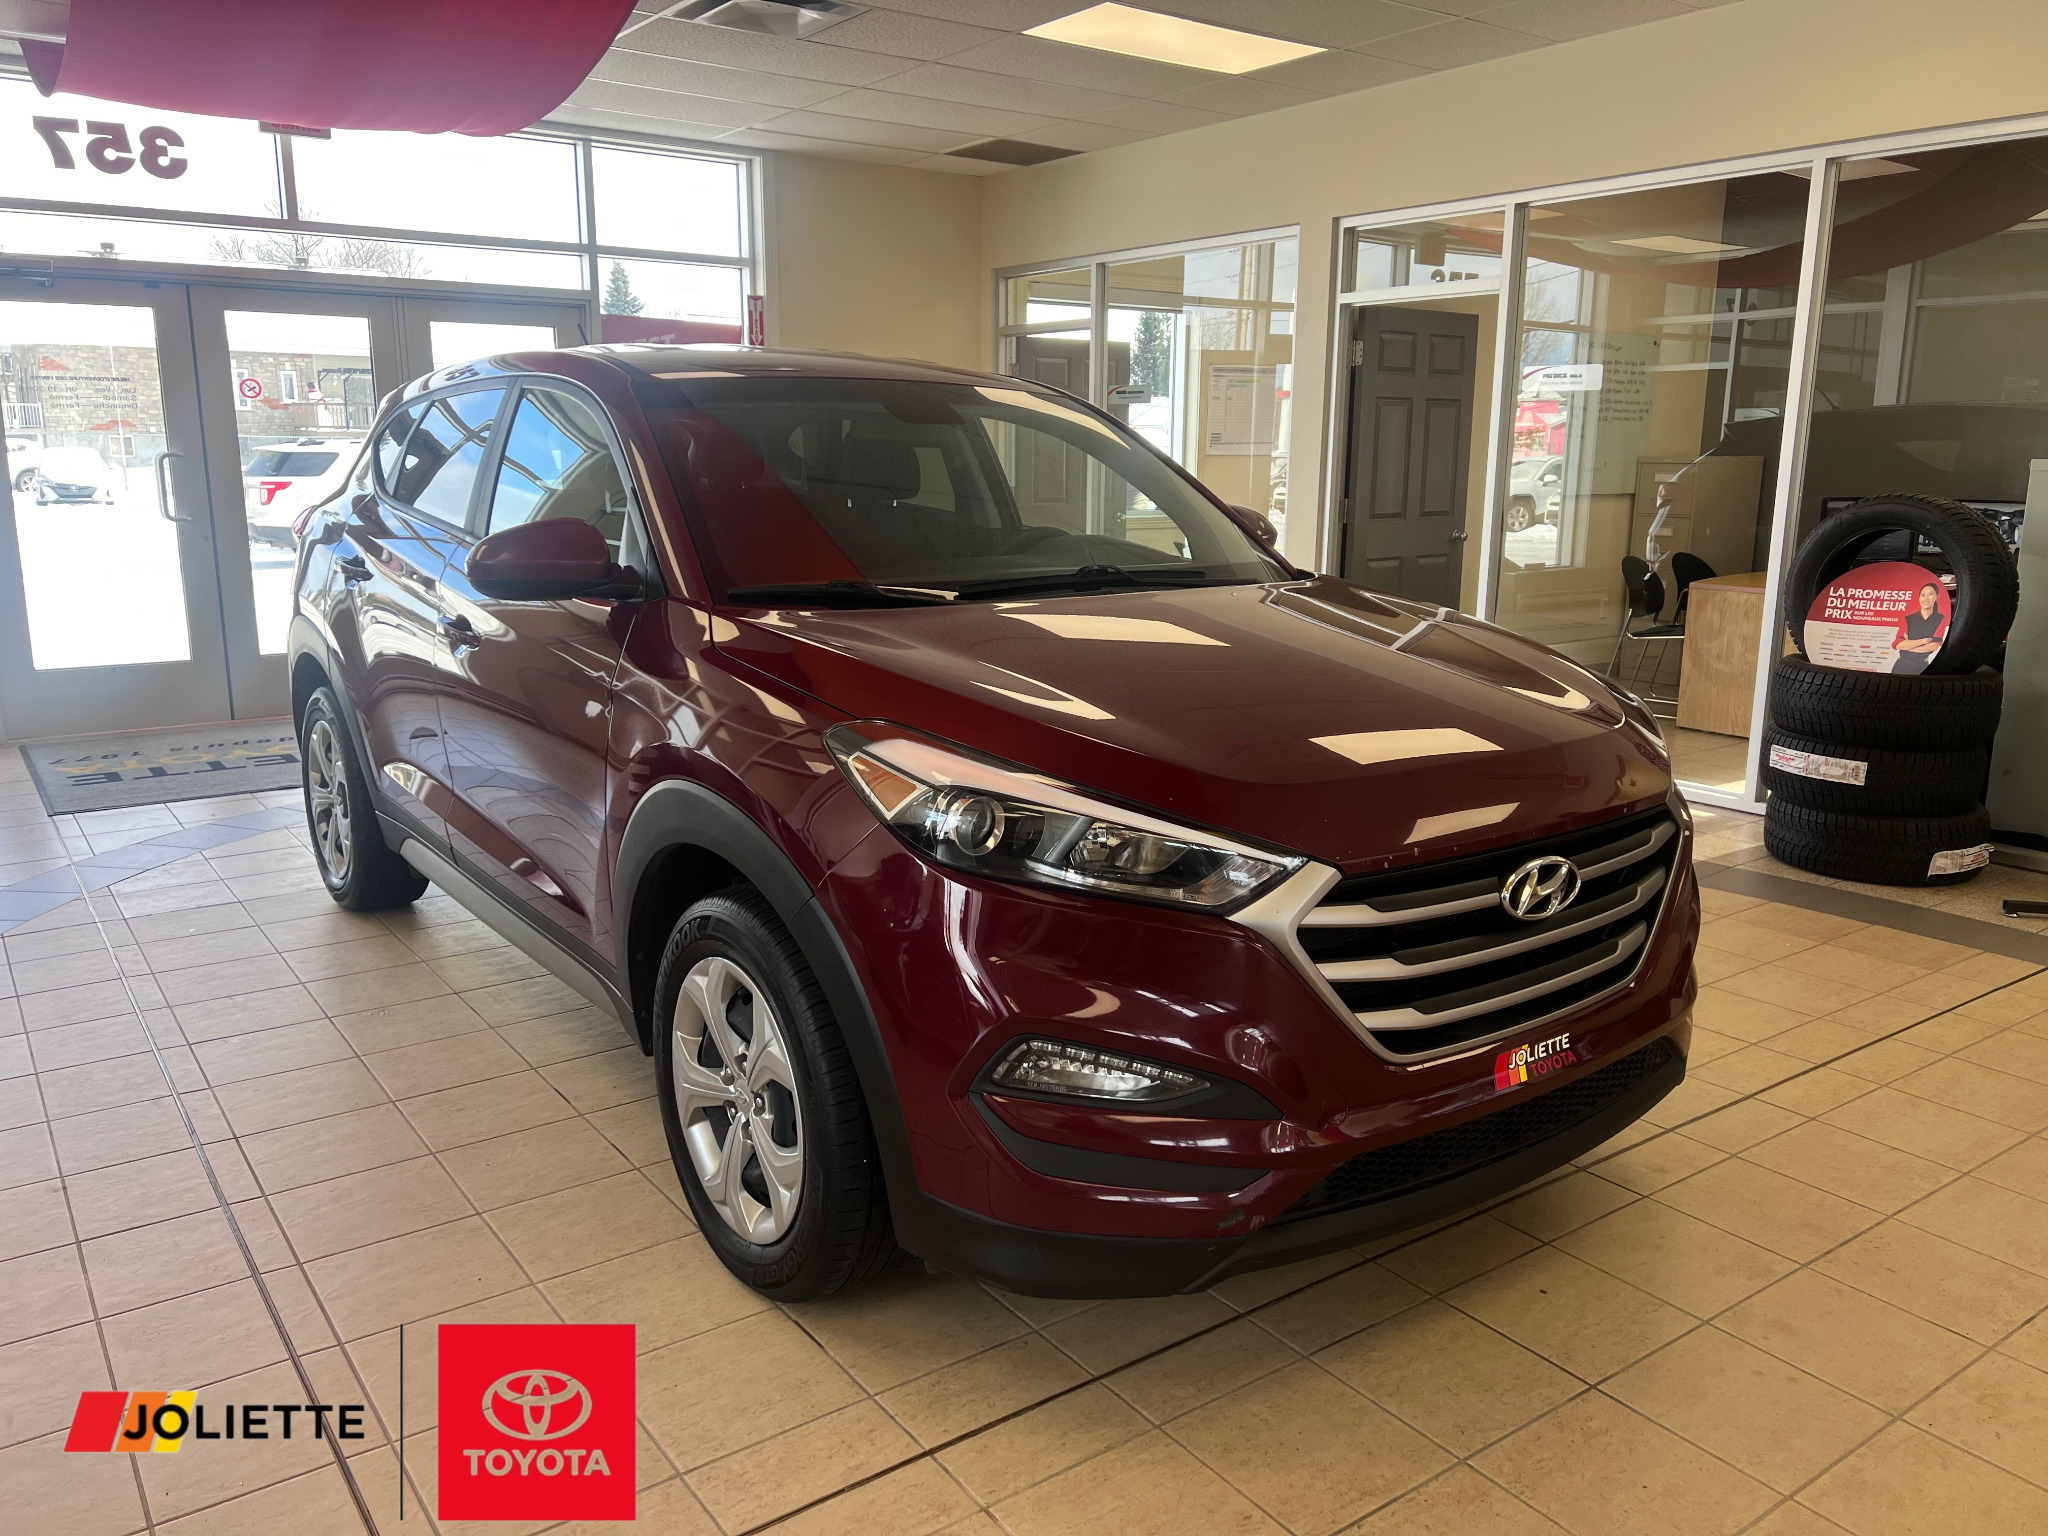 2018 Hyundai Tucson 2.0L AWD - RÉG. DE VITESSE - SIÈGES CHAUFFANTS !! 